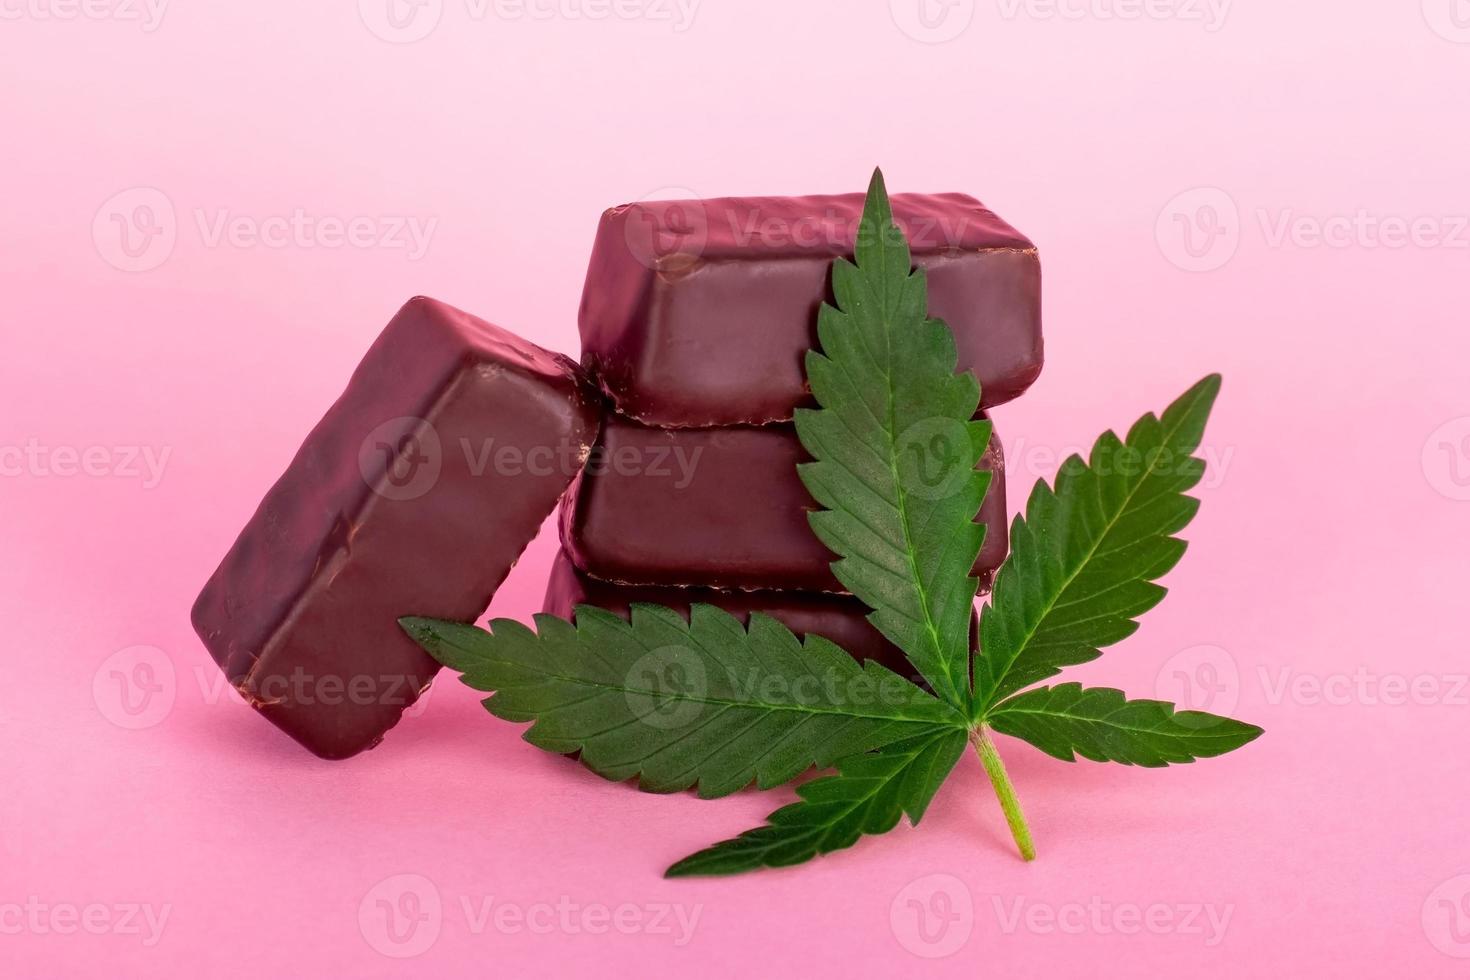 caramelle al cioccolato con cannabis medica su sfondo rosa foto